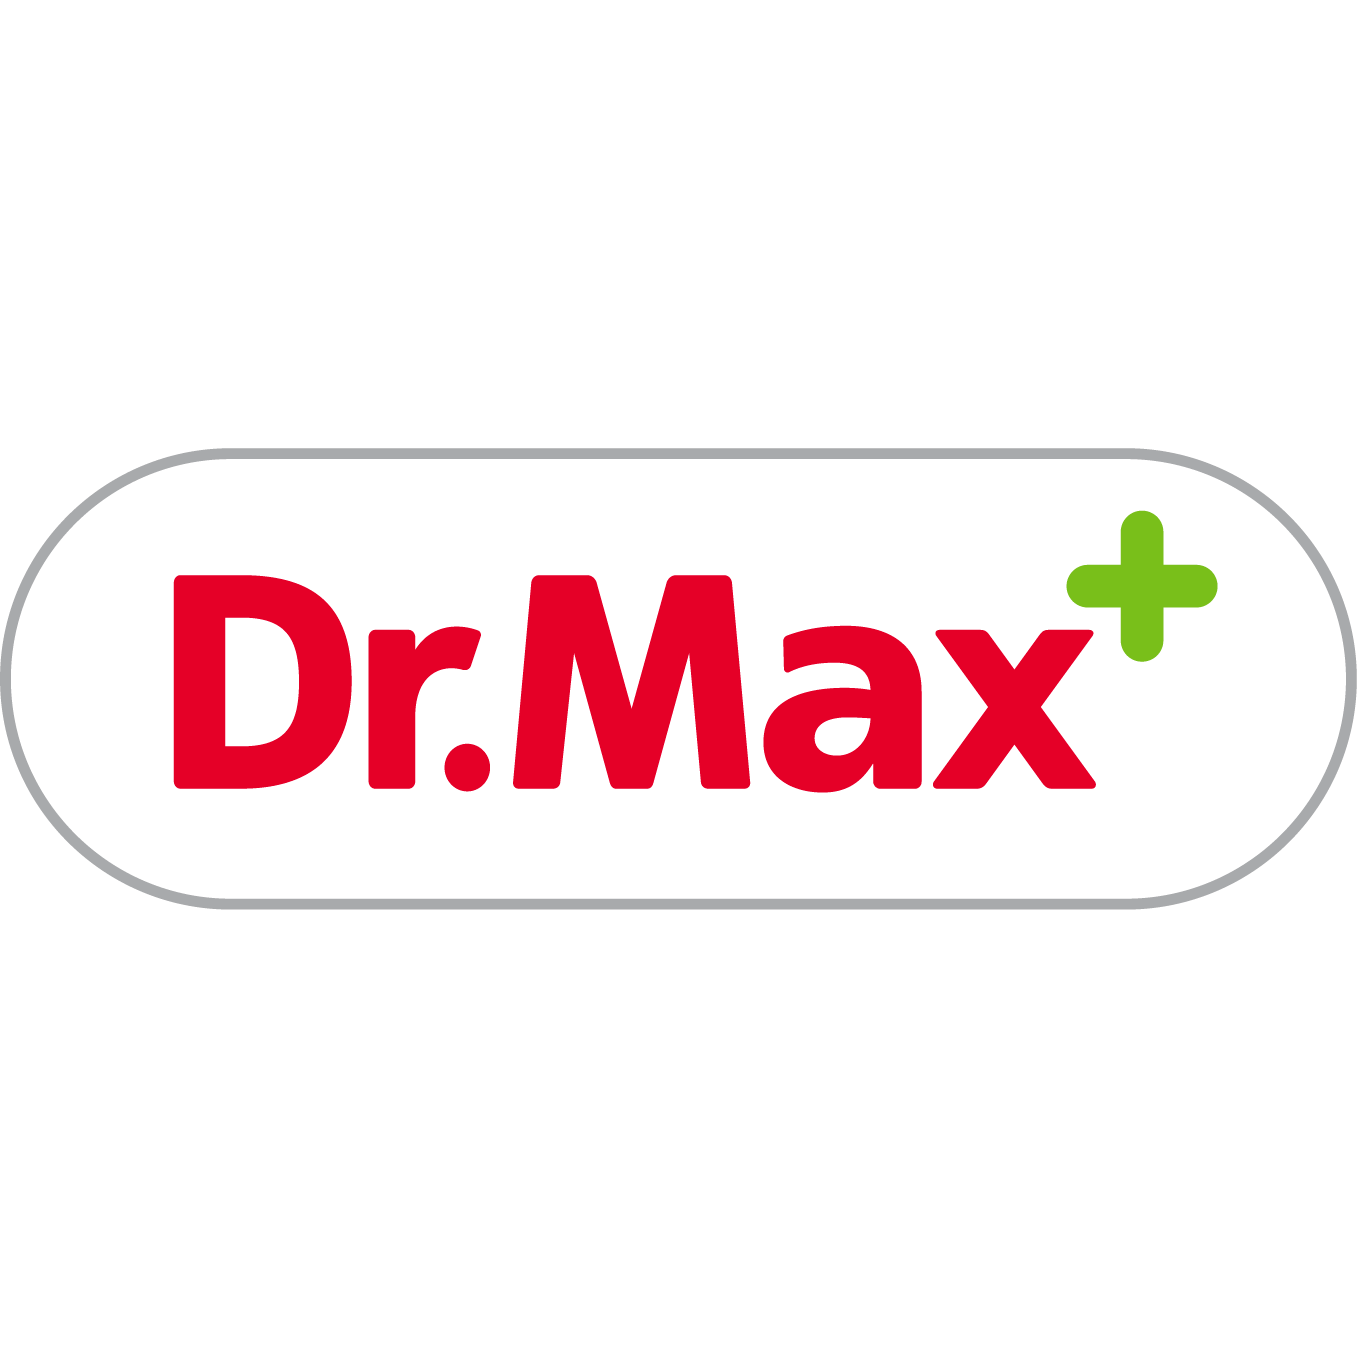 Farmacia Dr.Max - Farmacie Valmontone